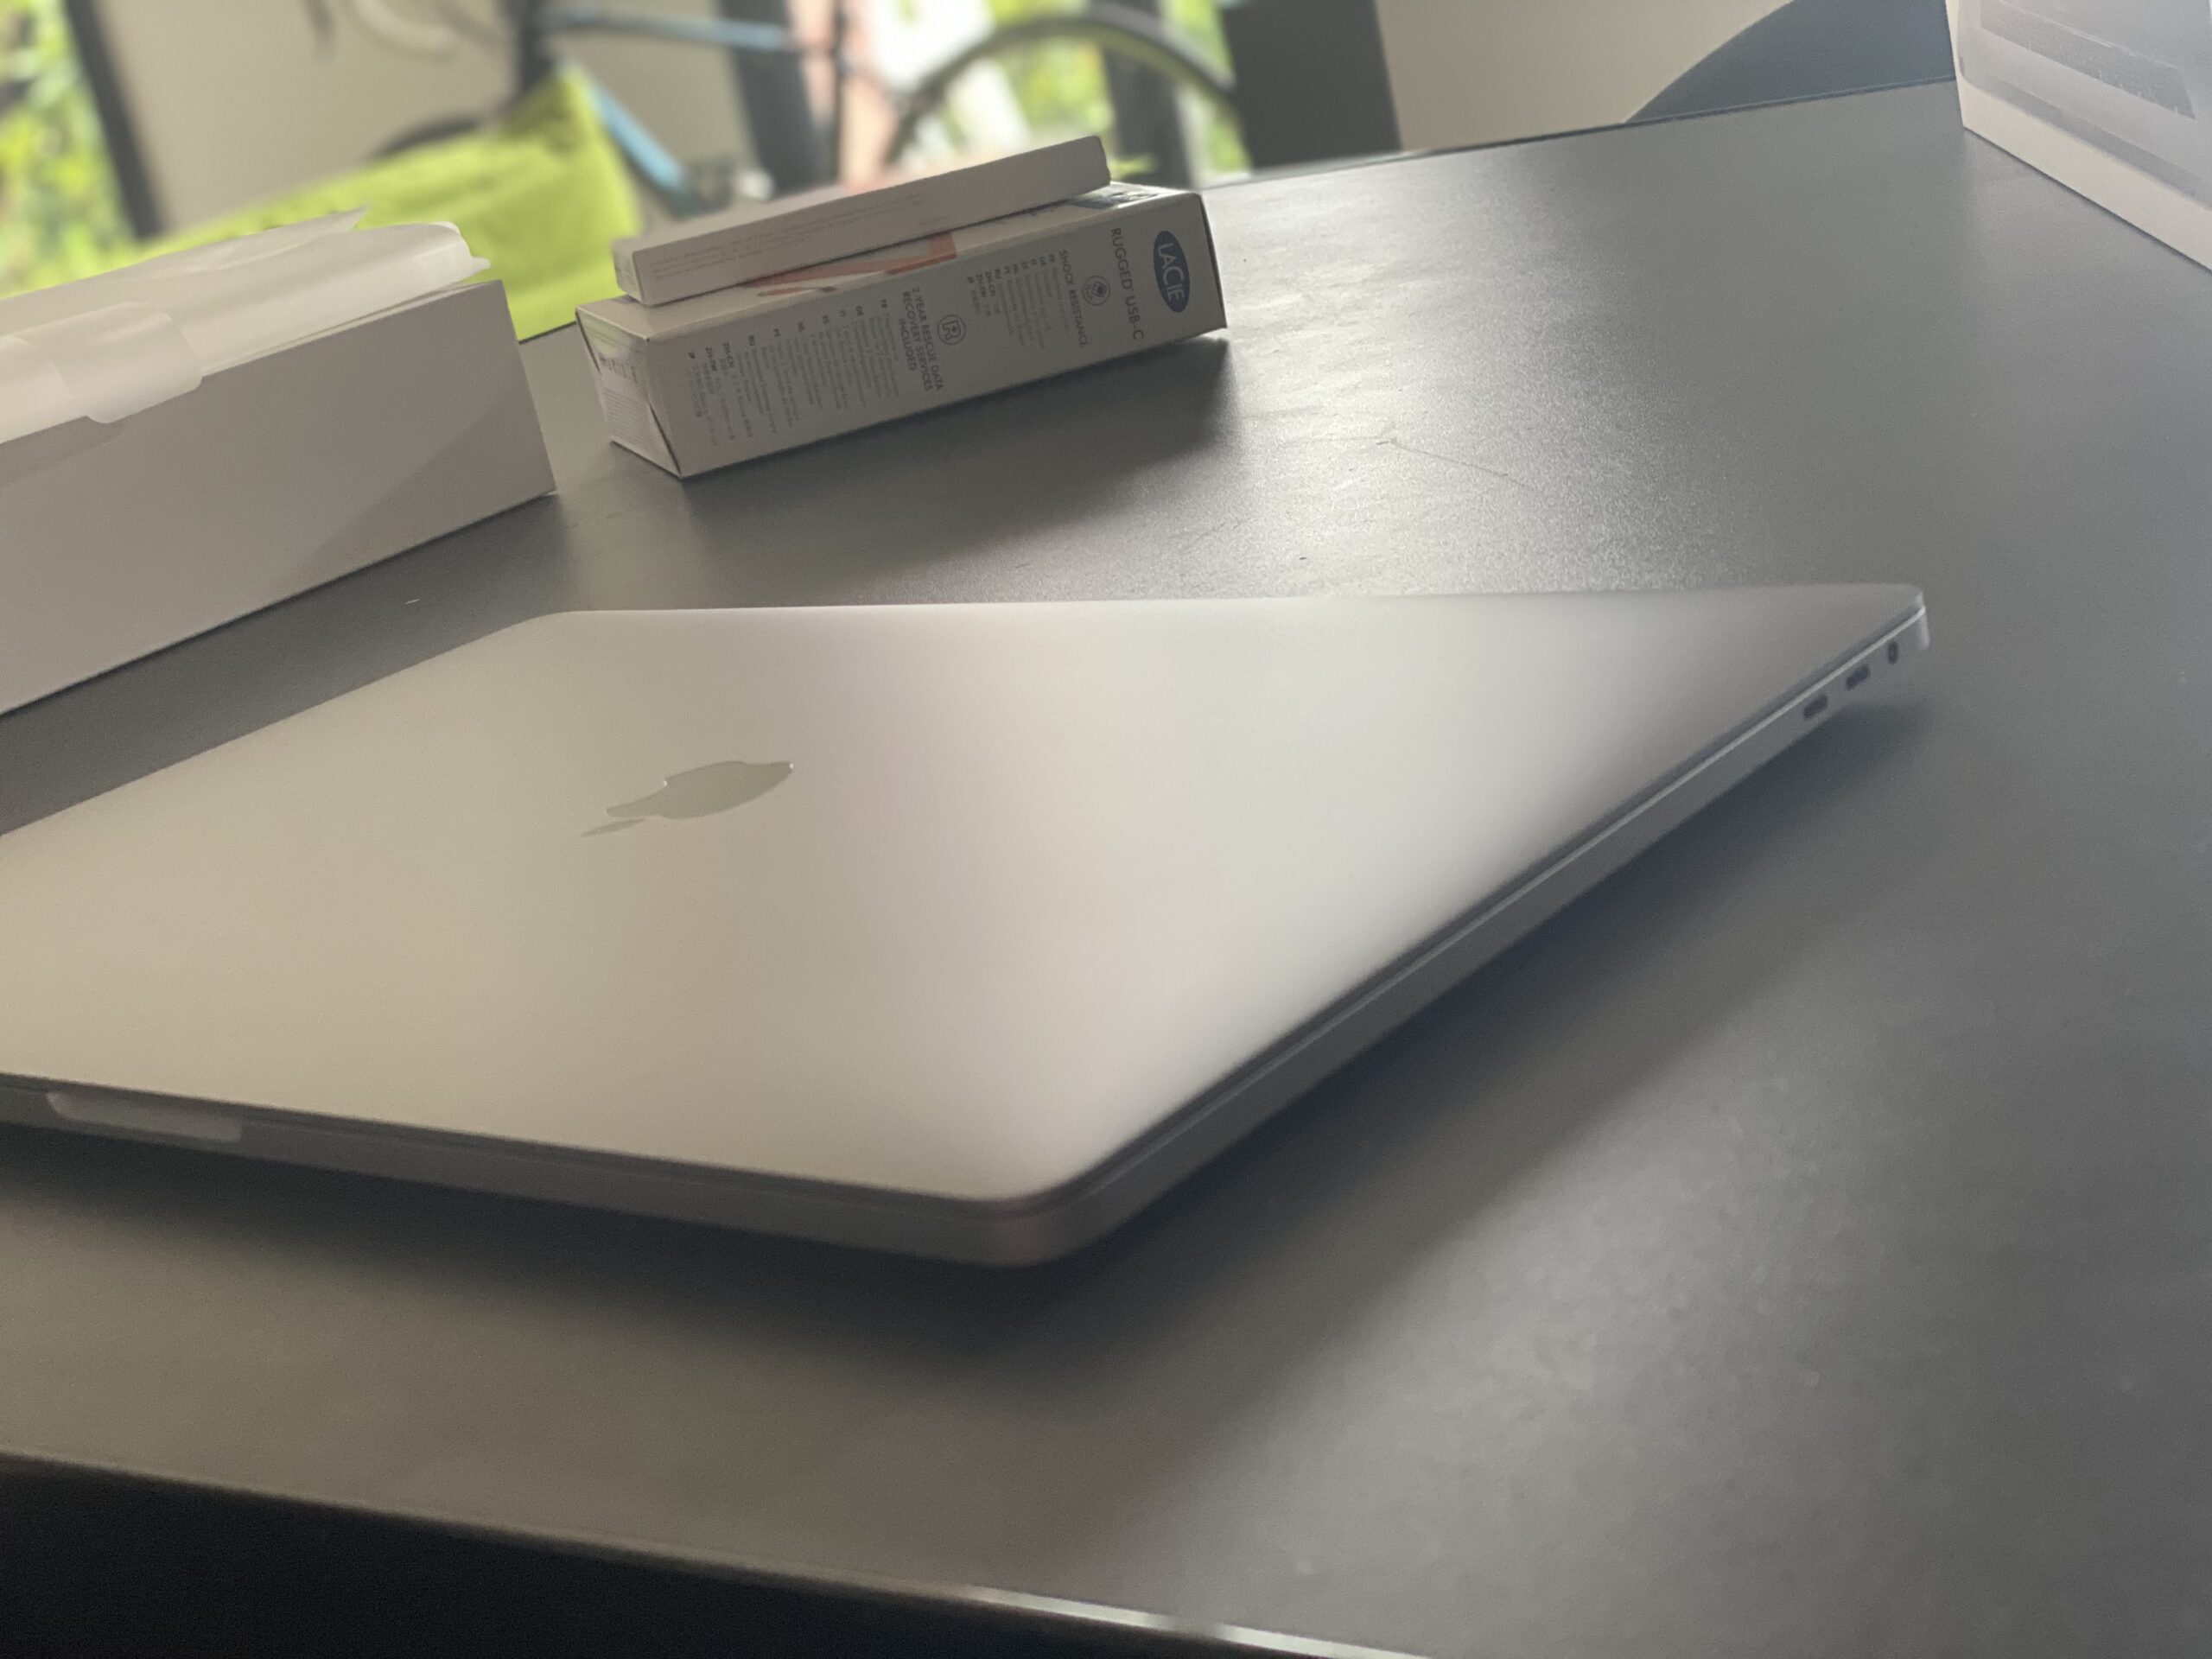 MacBook Pro 16p 2020